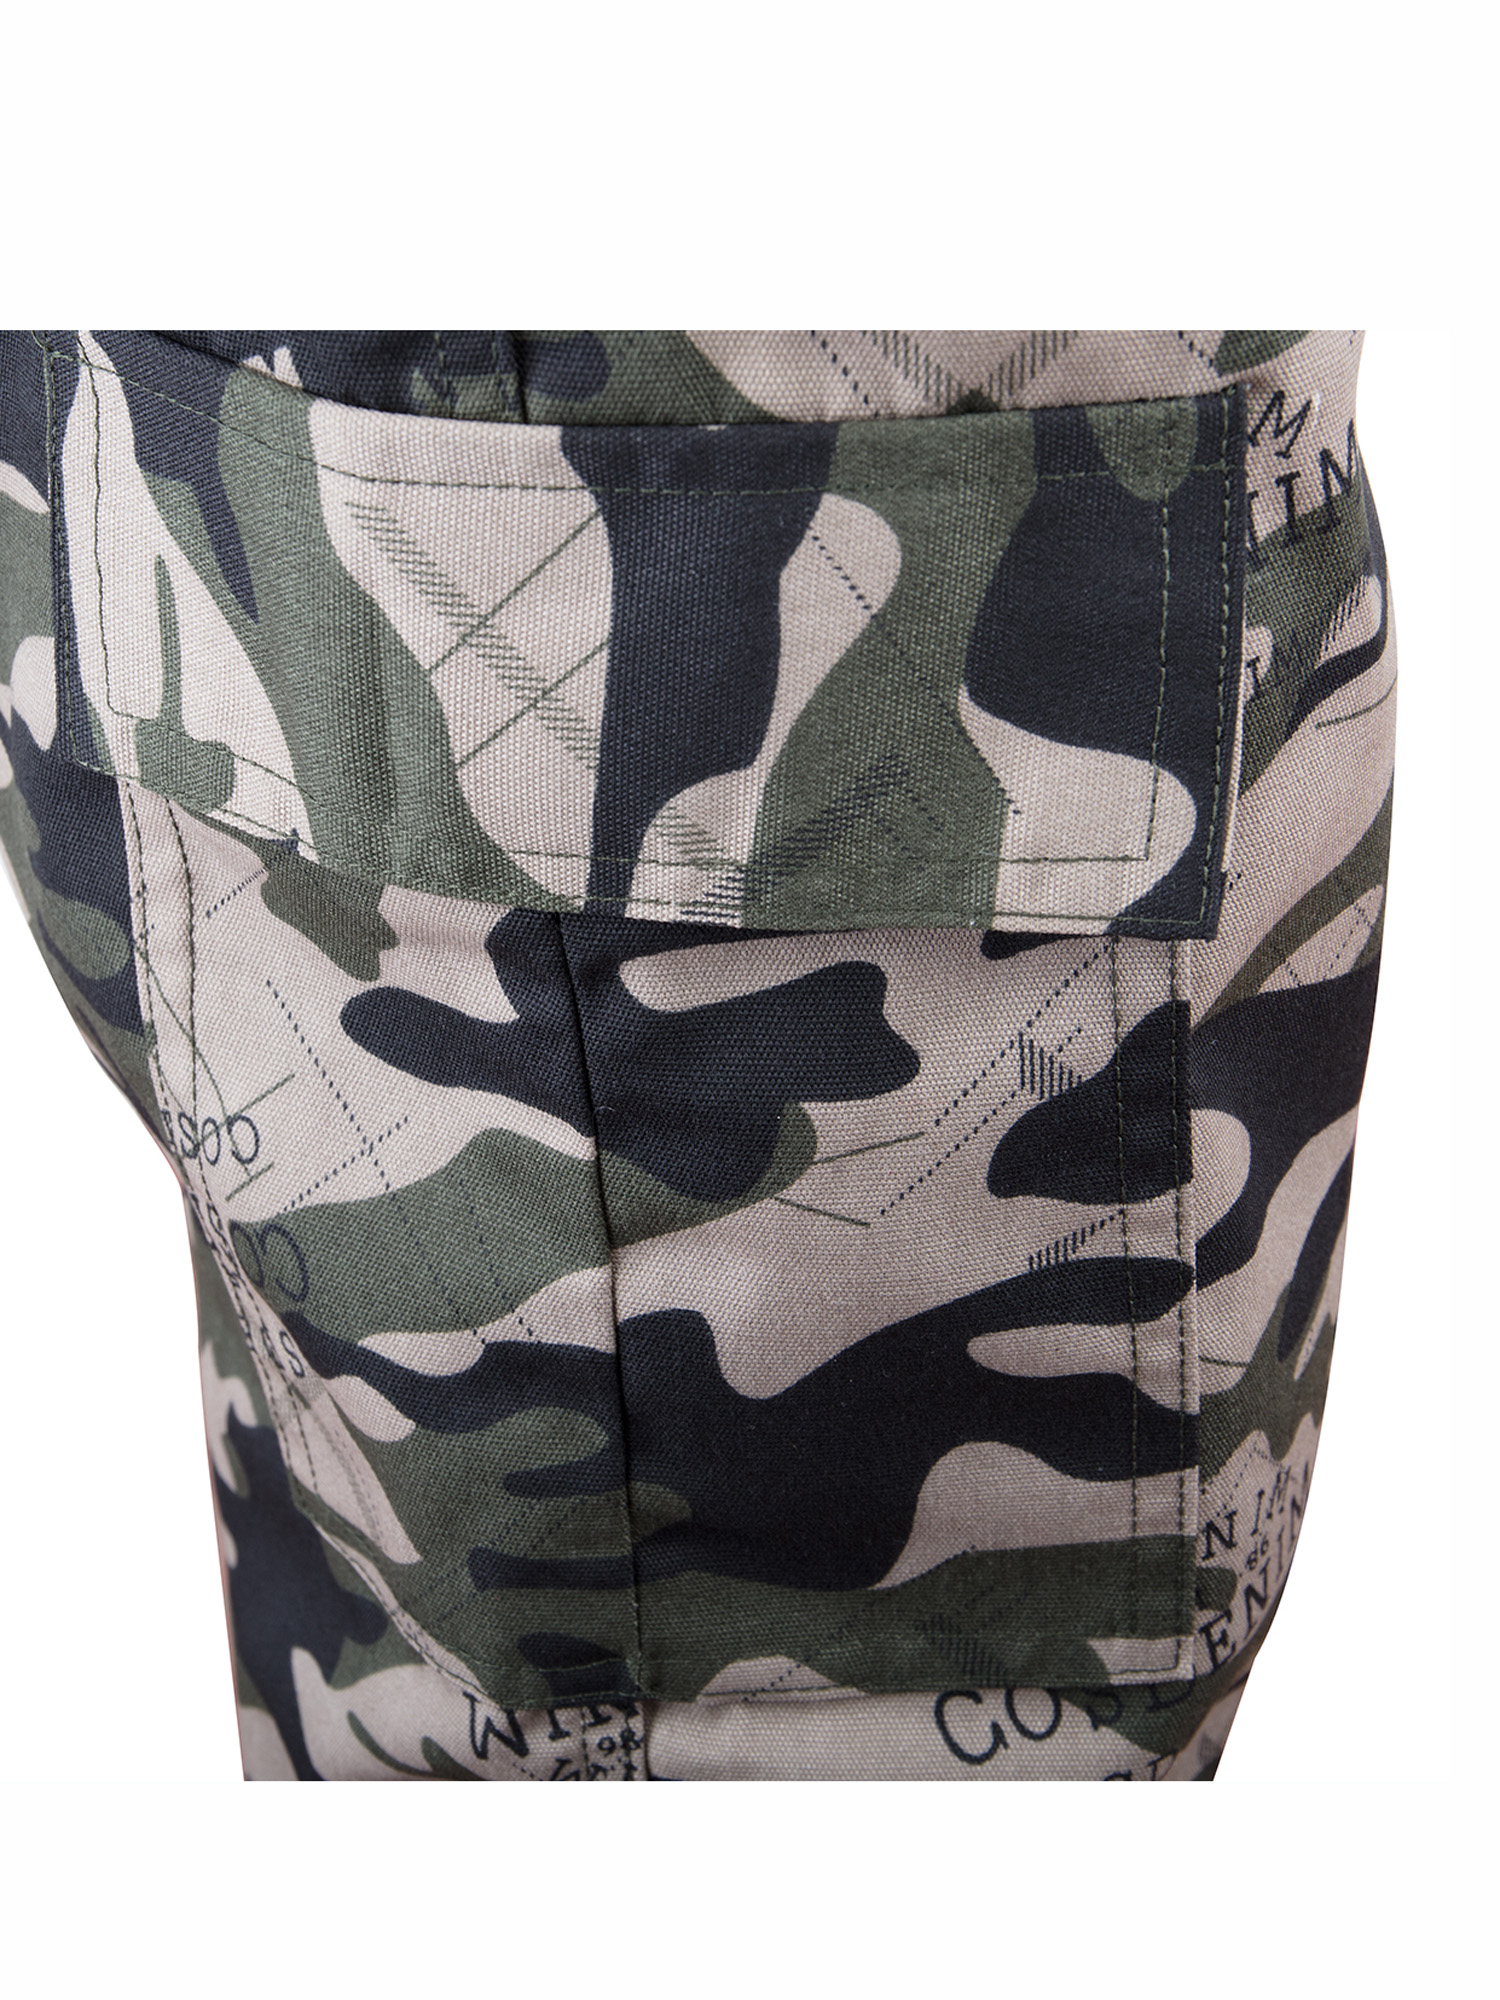 LELINTA Men's Military-Style Camo Cargo BDU Pants Jogger Mossy Oak ...